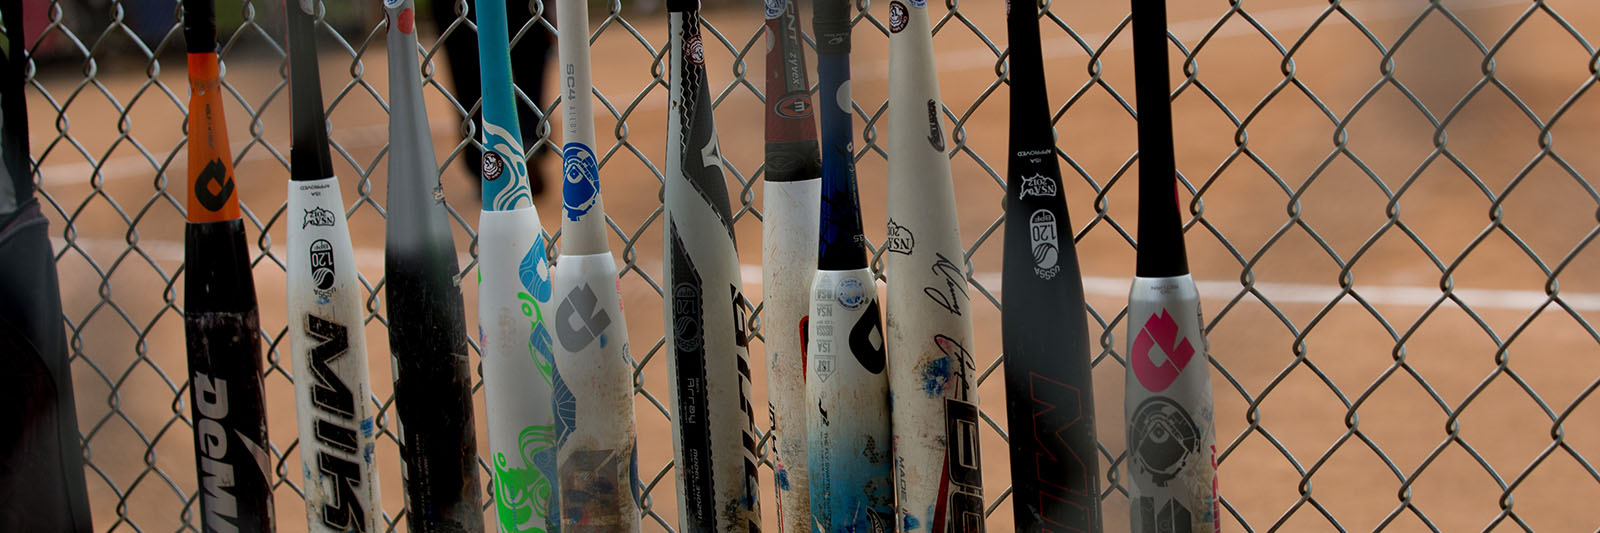 MariChambers-softball-bats-against-chainlink-fence-1600x533